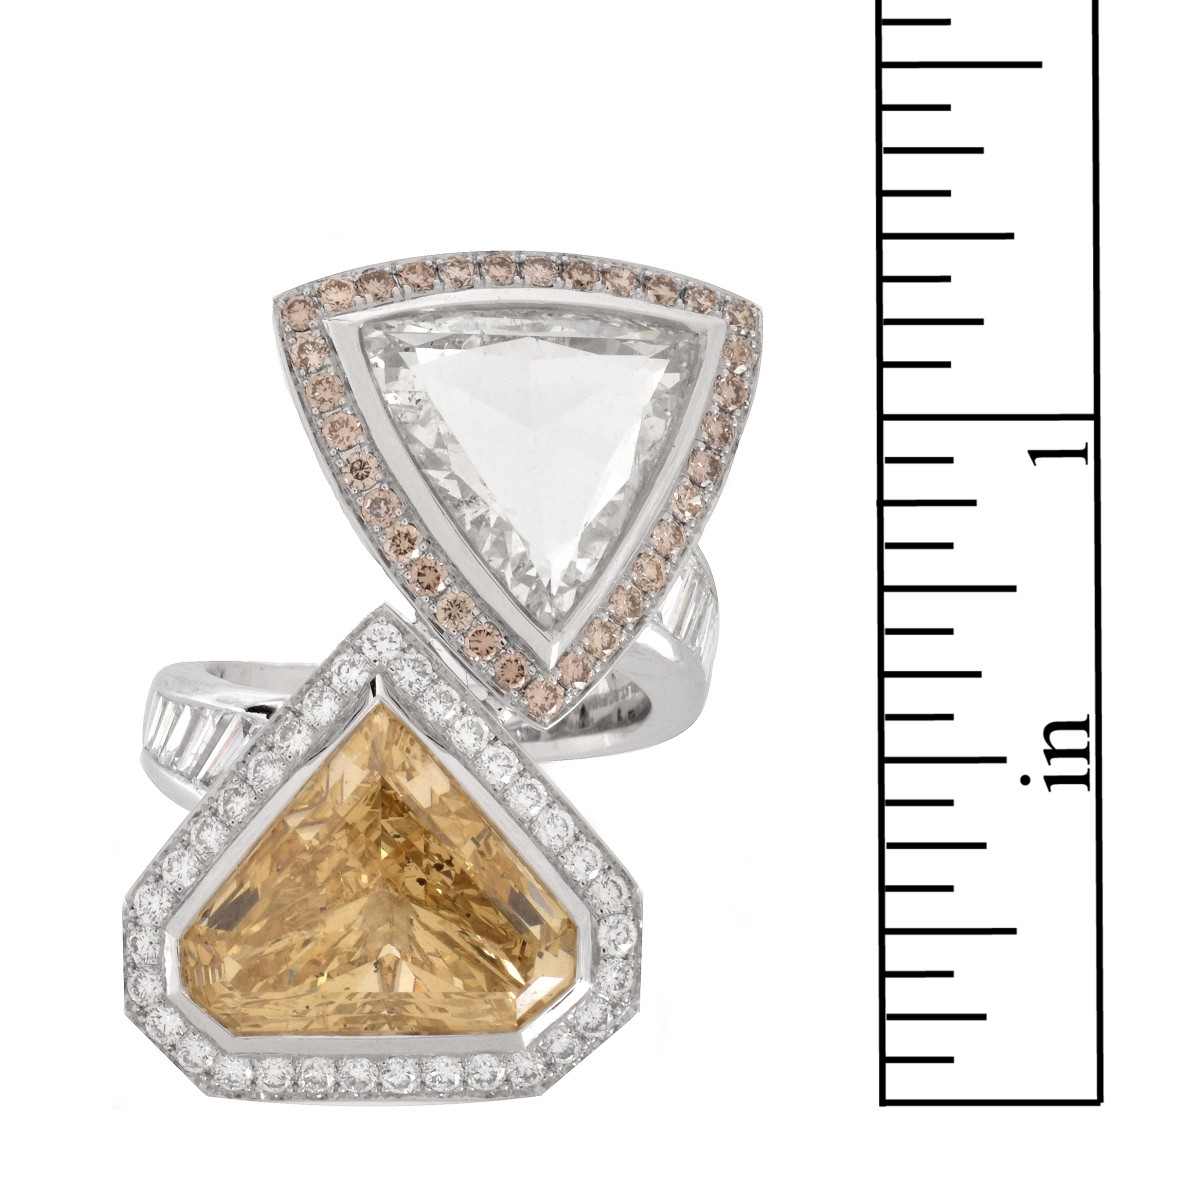 10.55 Carat Diamond and Platinum Ring